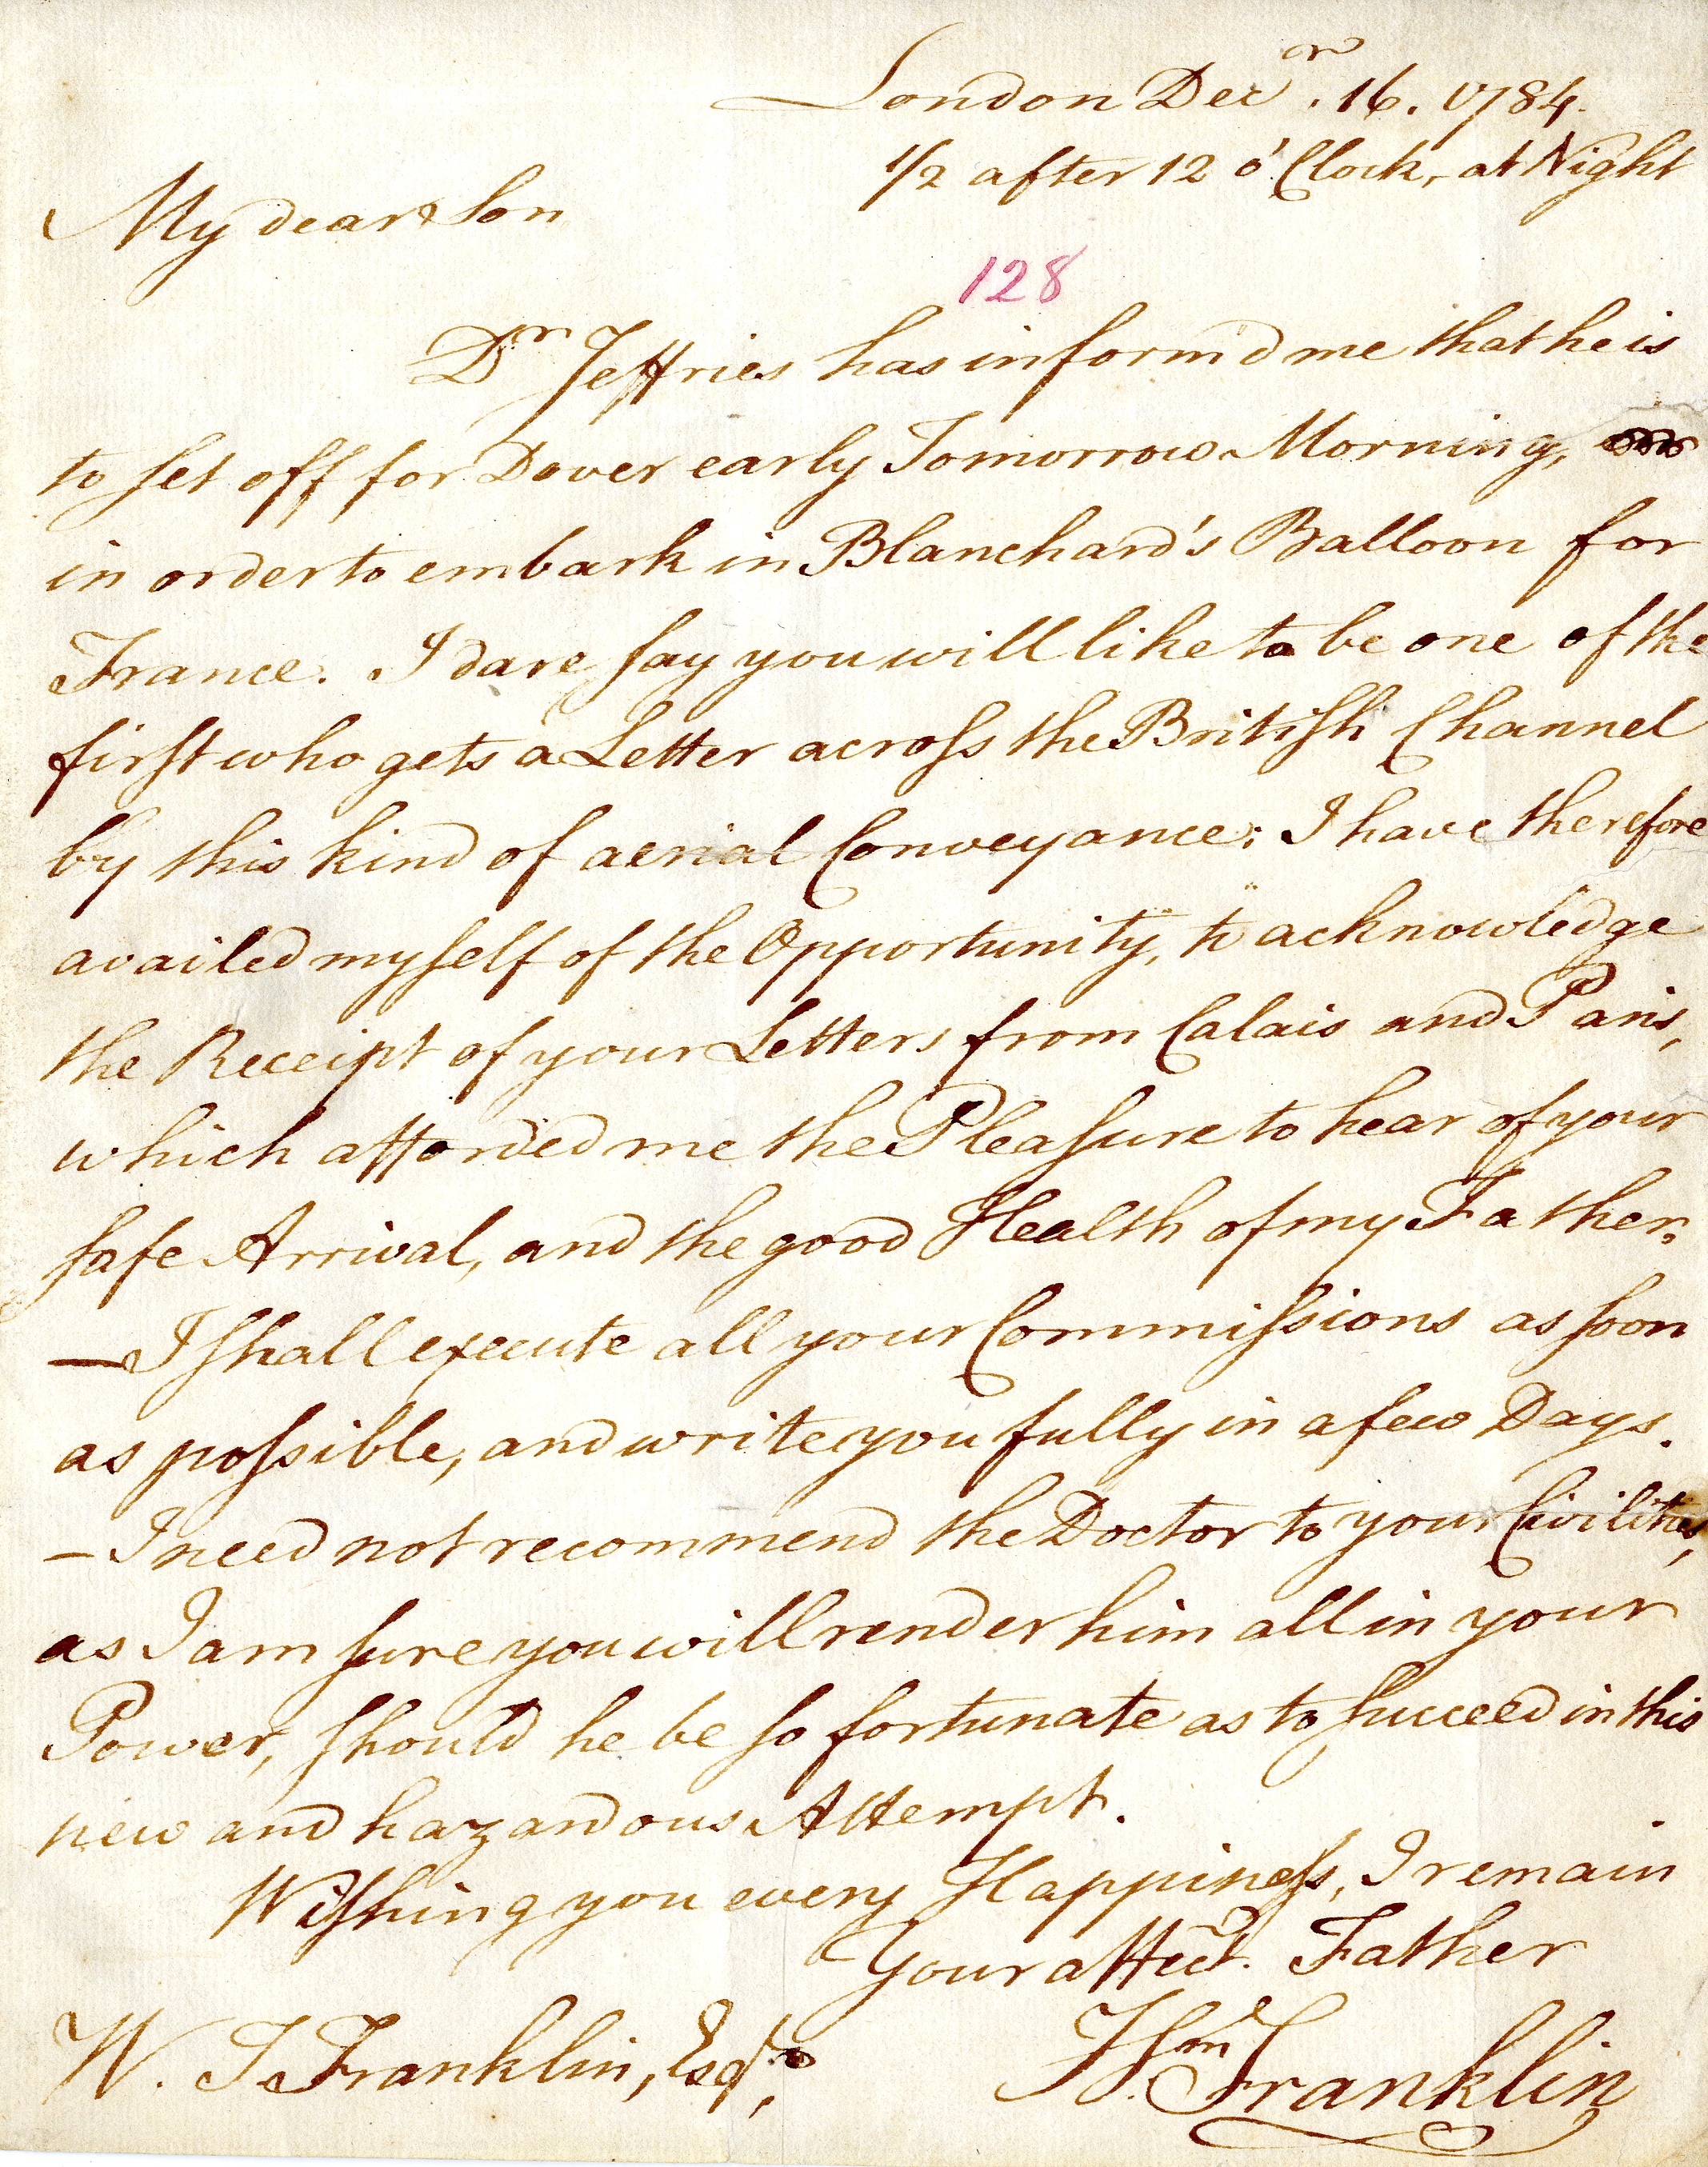 18th century letter